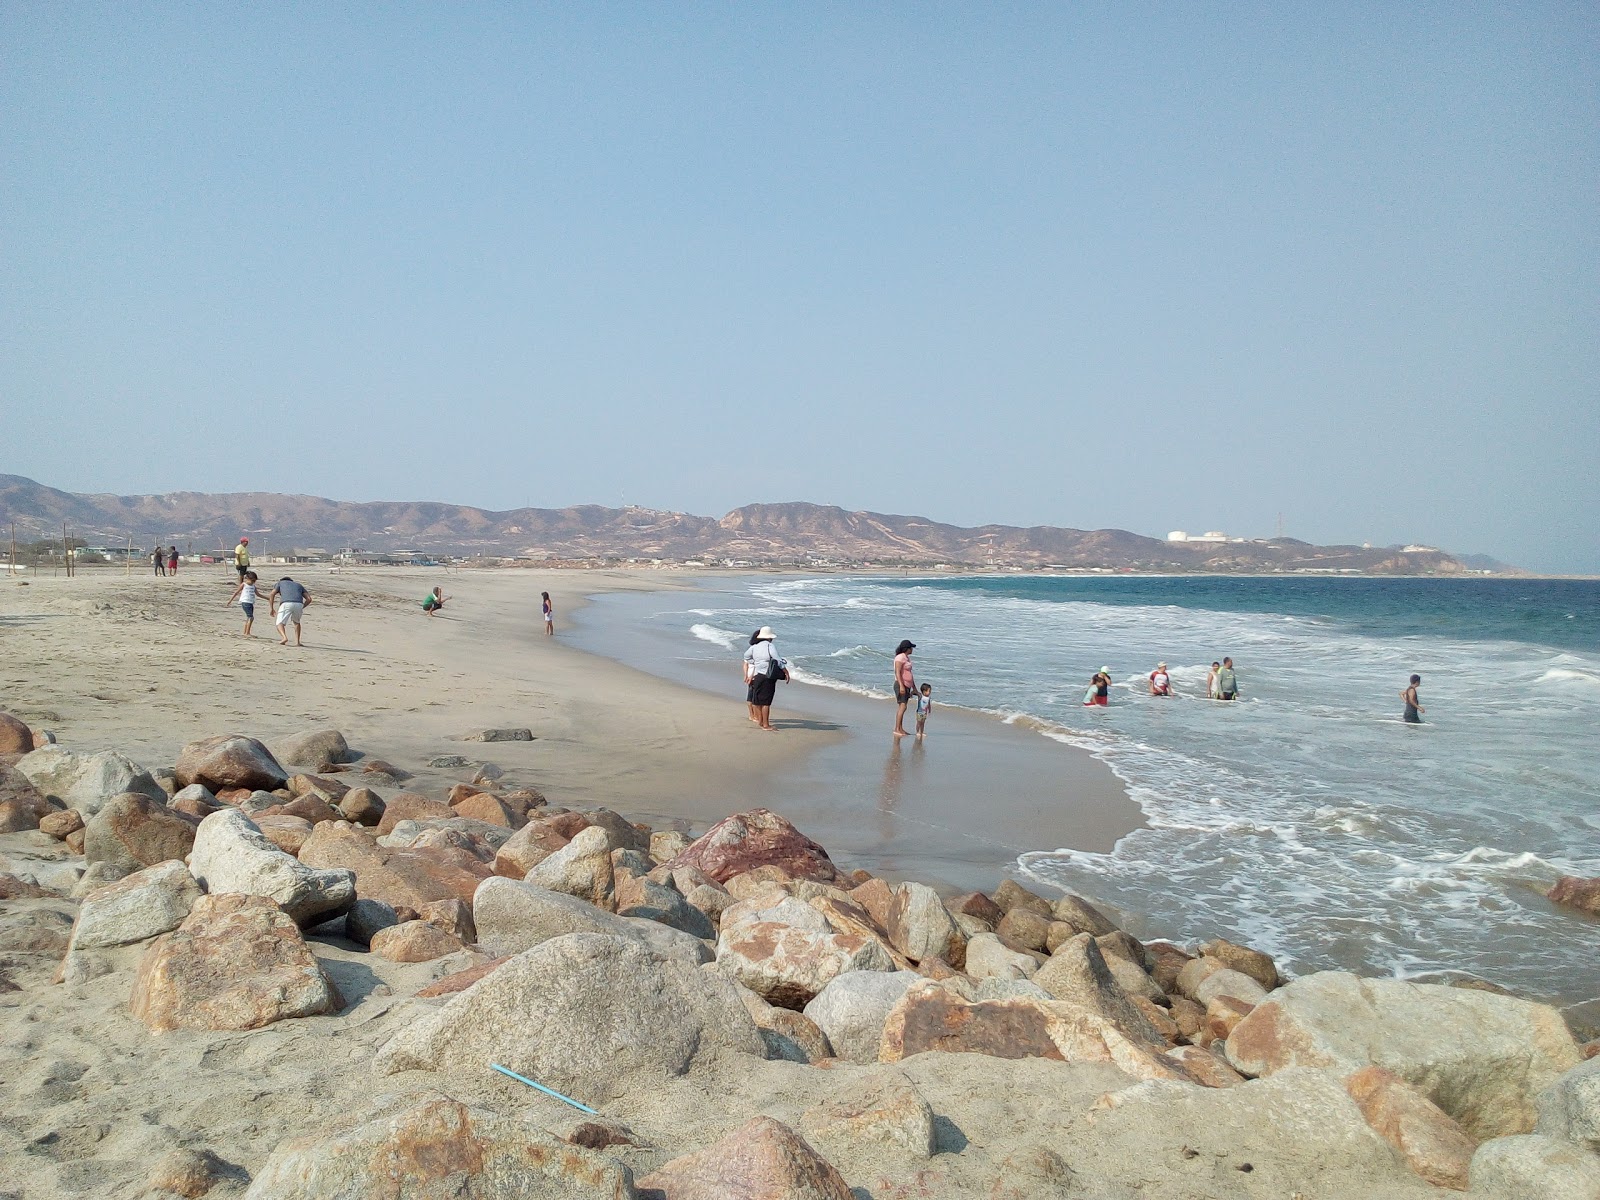 Foto di Las Escolleras beach con una superficie del sabbia grigia